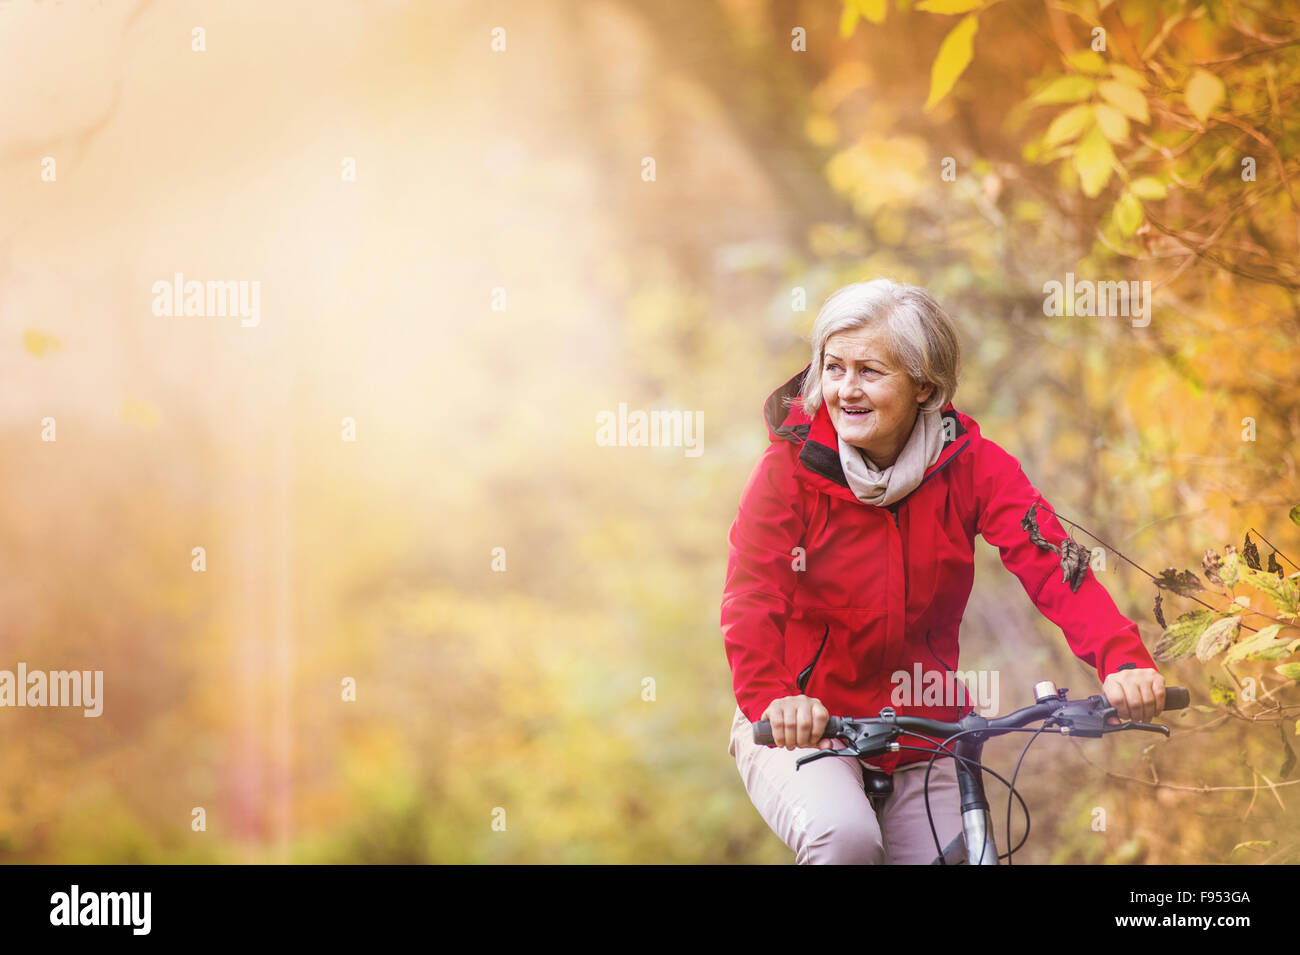 Active senior woman riding bike in autumn nature. Stock Photo